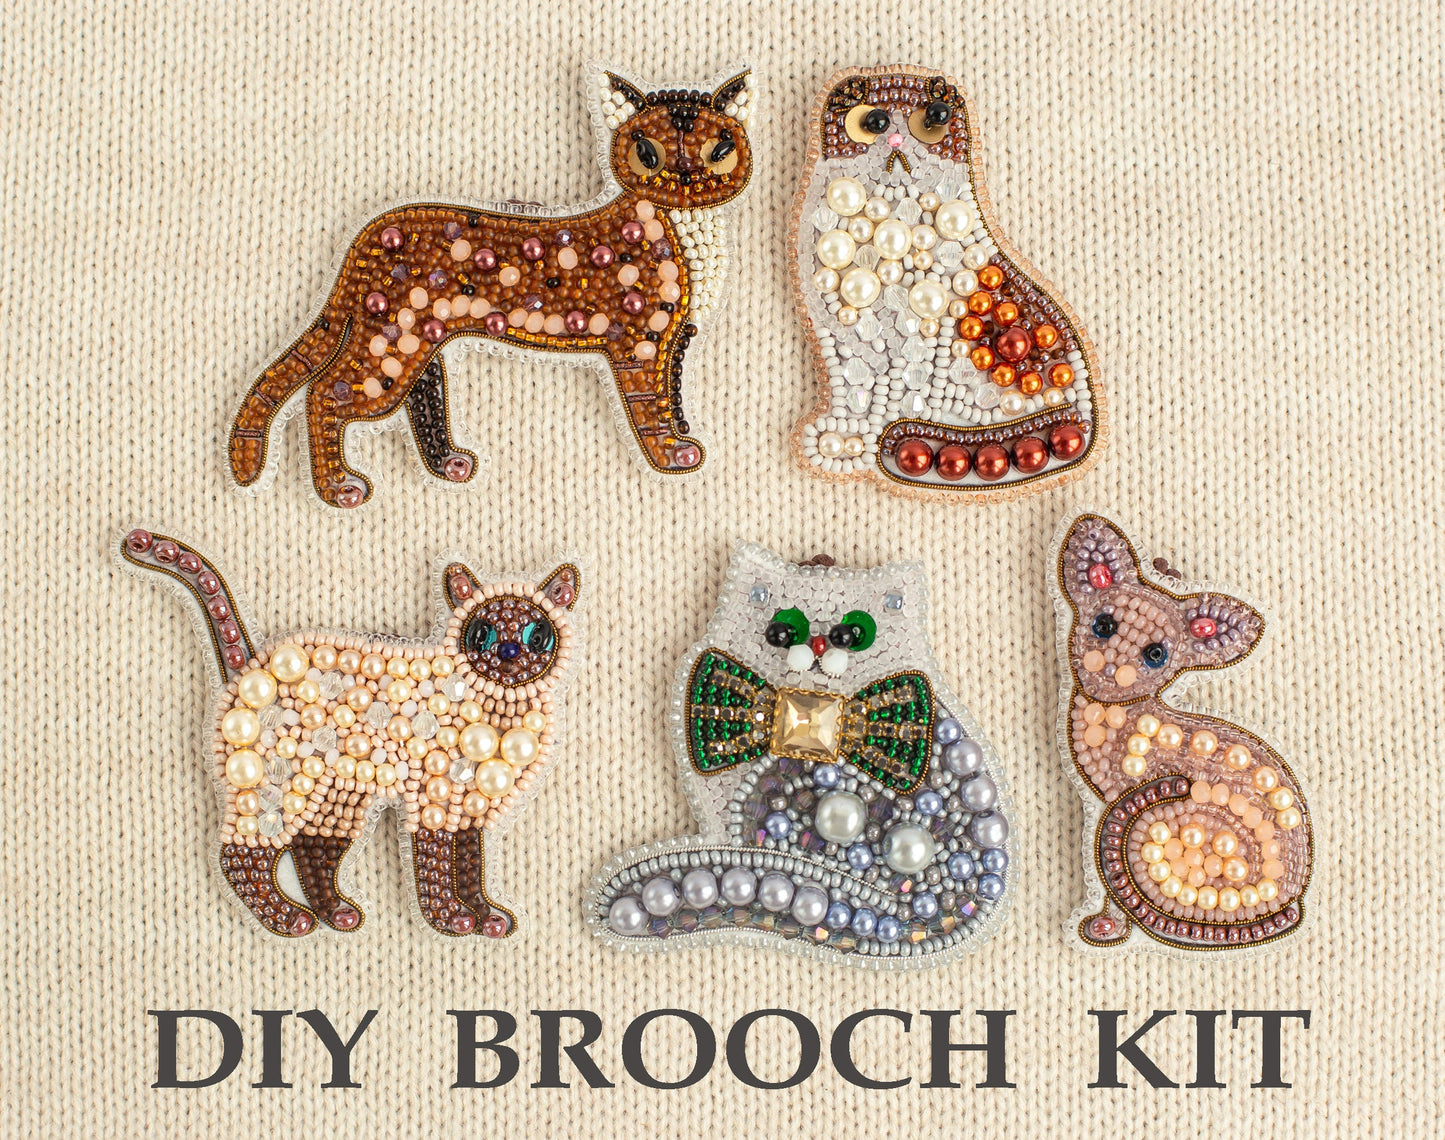 Bengal Cat Bead embroidery kit. Seed Bead Brooch kit. DIY Craft kit. Beadweaving Kit. Needlework beading. Handmade Jewelry Making Kit